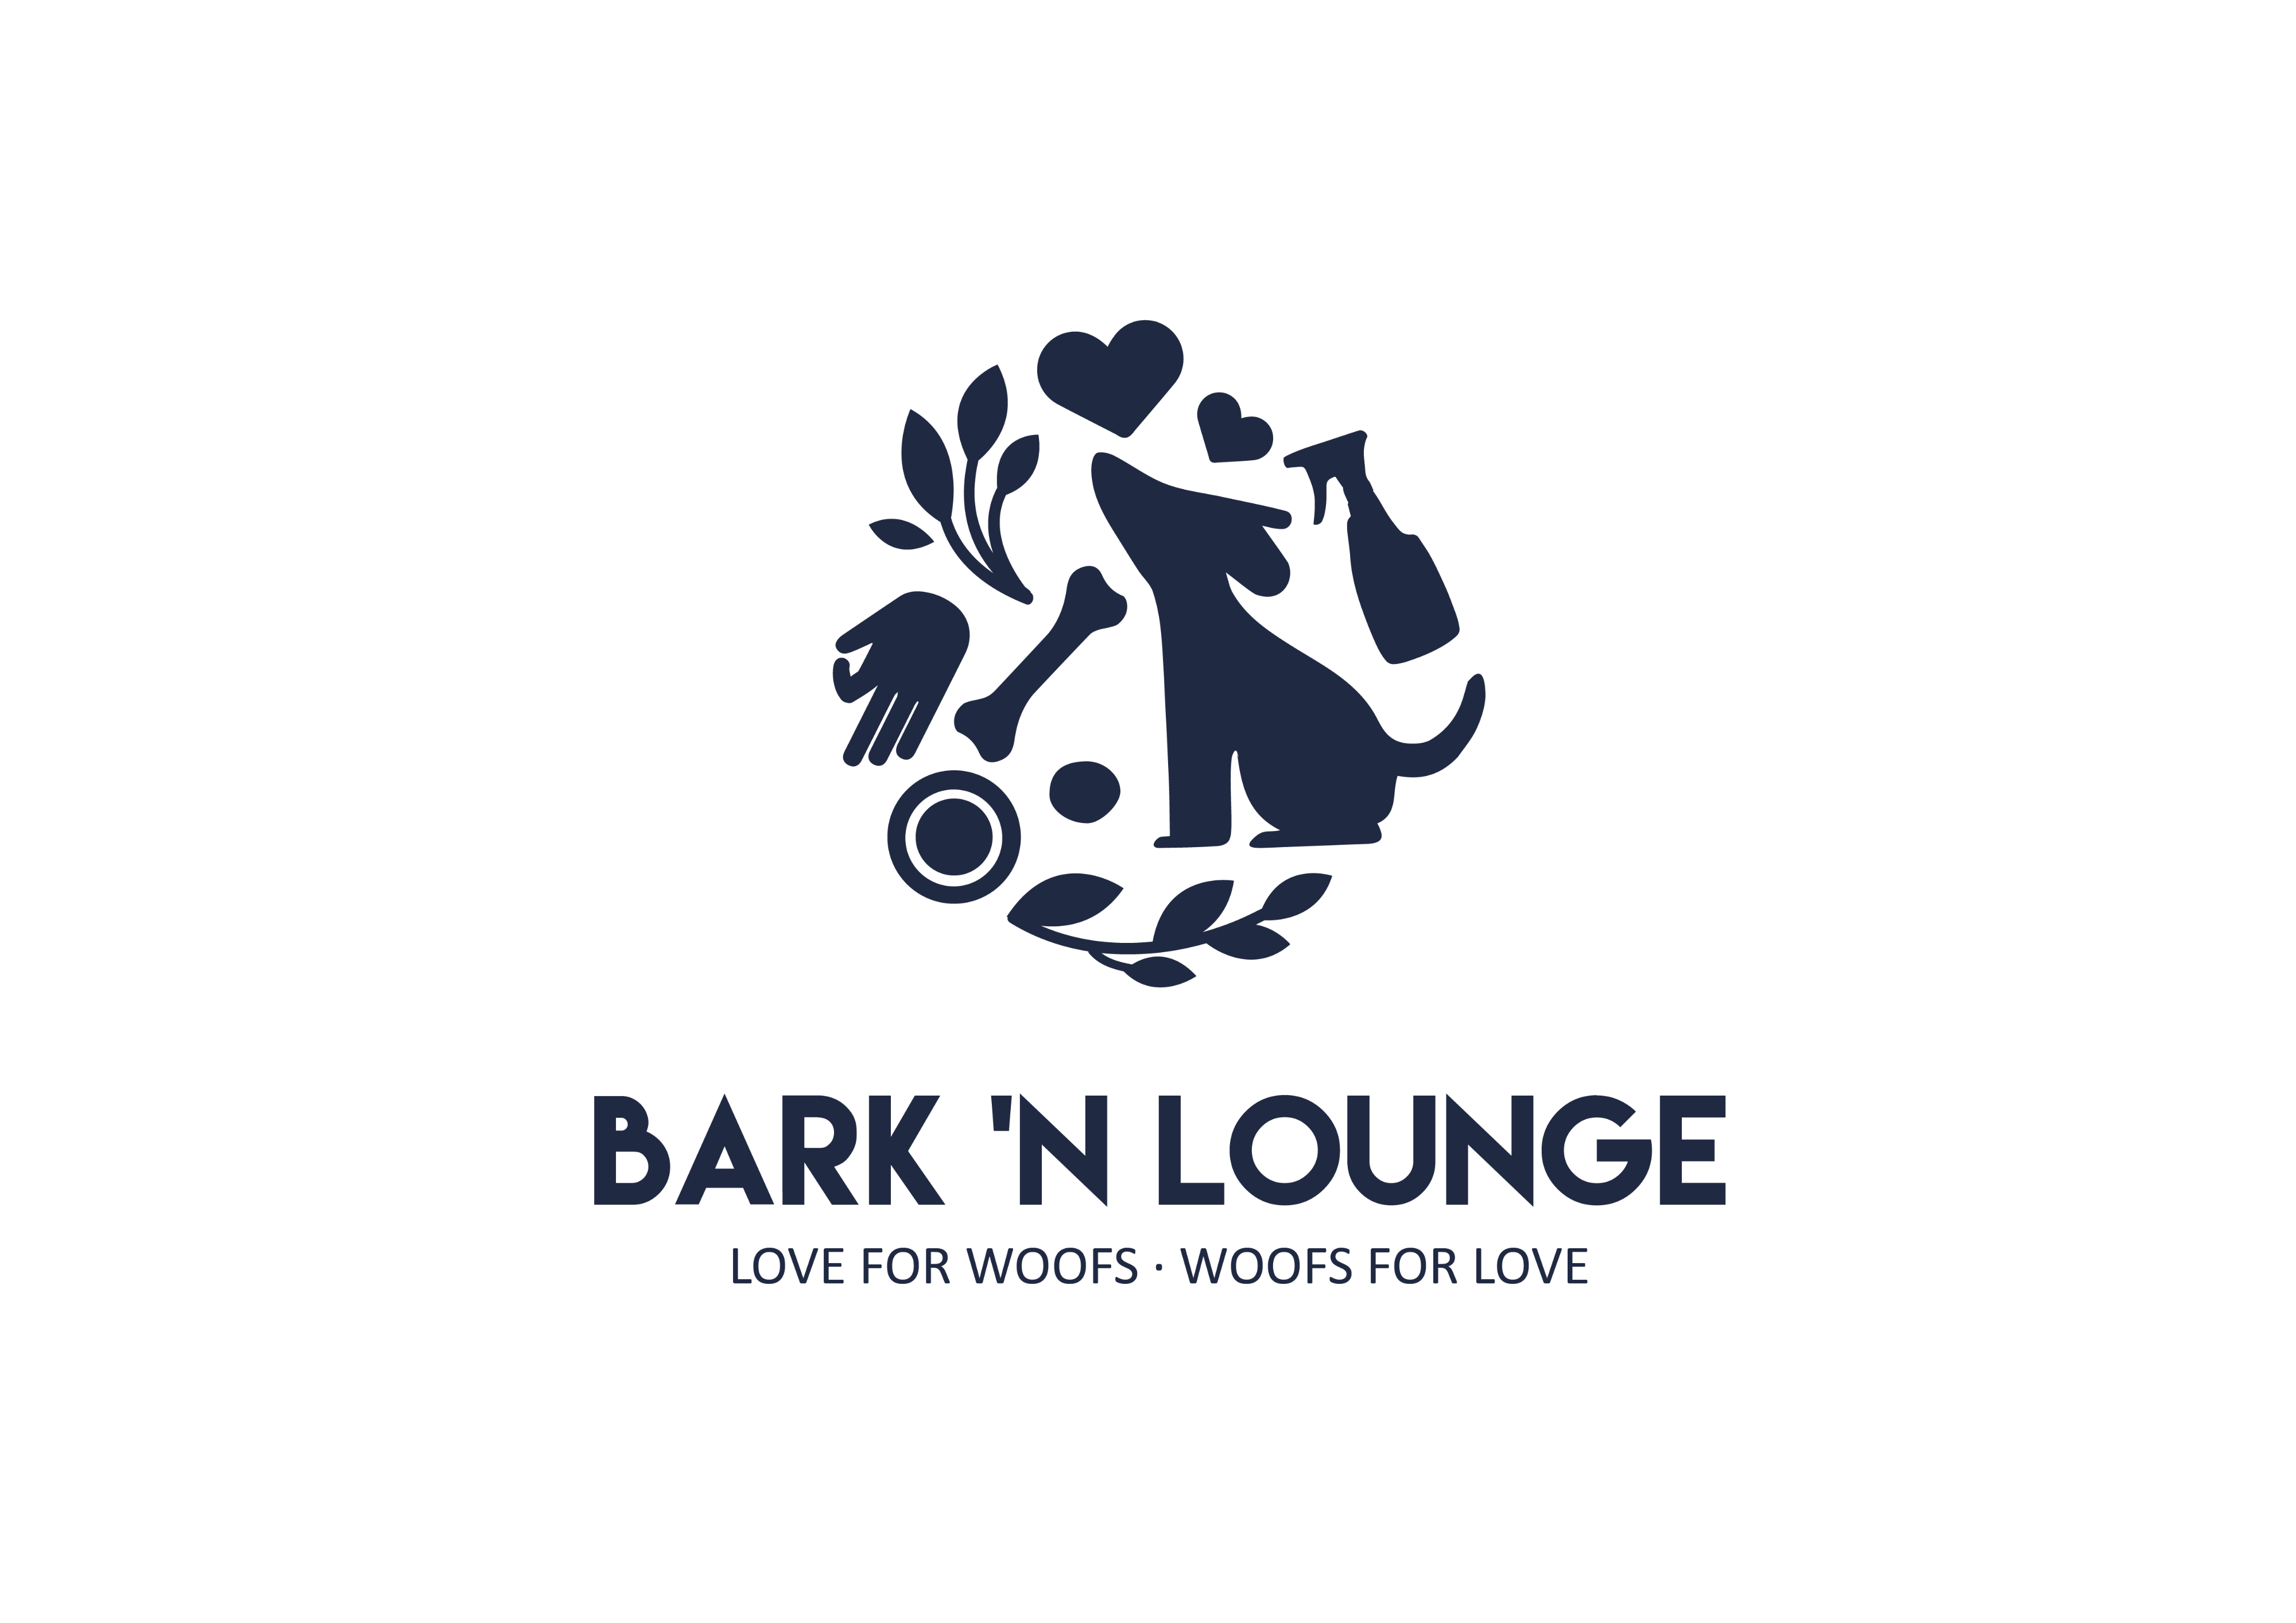 The Bark Logo - barknlounge